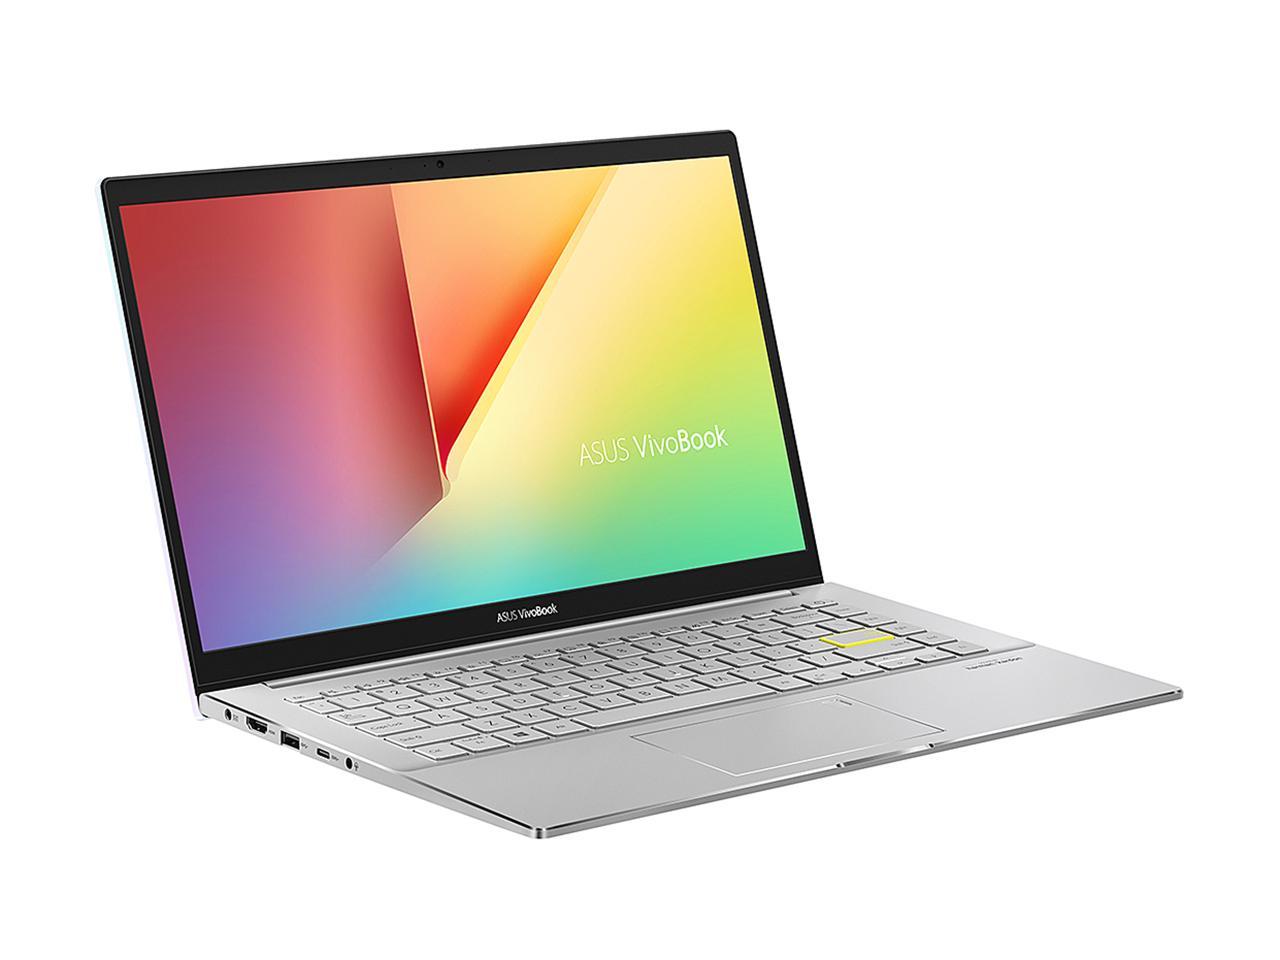 ASUS VivoBook S14 S433 Thin and Light 14" FHD, Intel Core i5-10210U CPU, 8 GB DDR4 RAM, 512 GB PCIe SSD, Windows 10 Home, S433FA-DS51-WH, Dreamy White